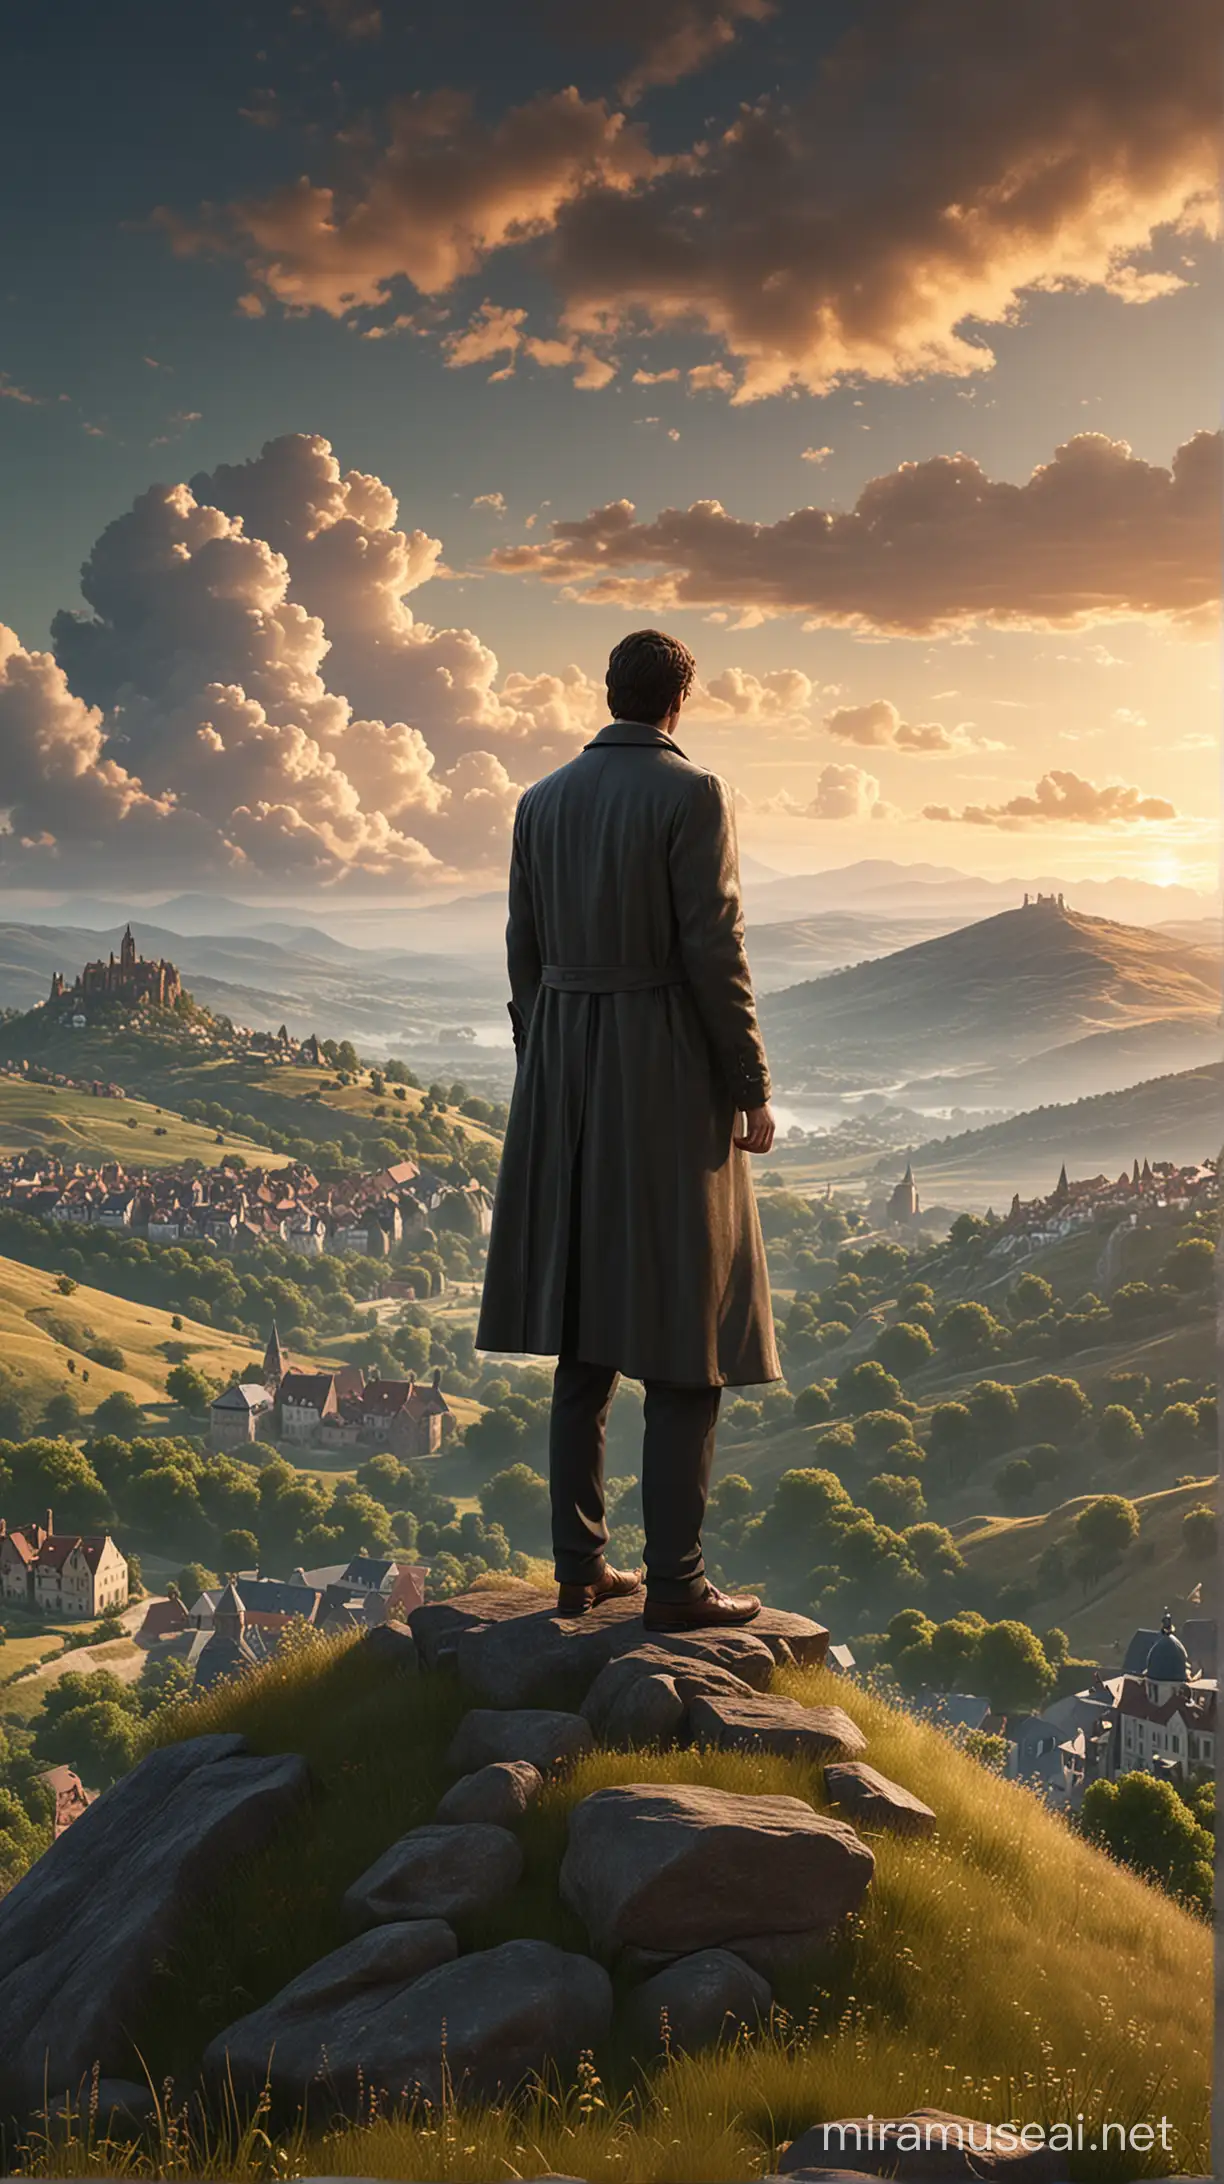 Mysterious Man Overlooking Majestic Landscape Enigmatic Figure in Elegant Topcoat on Hilltop